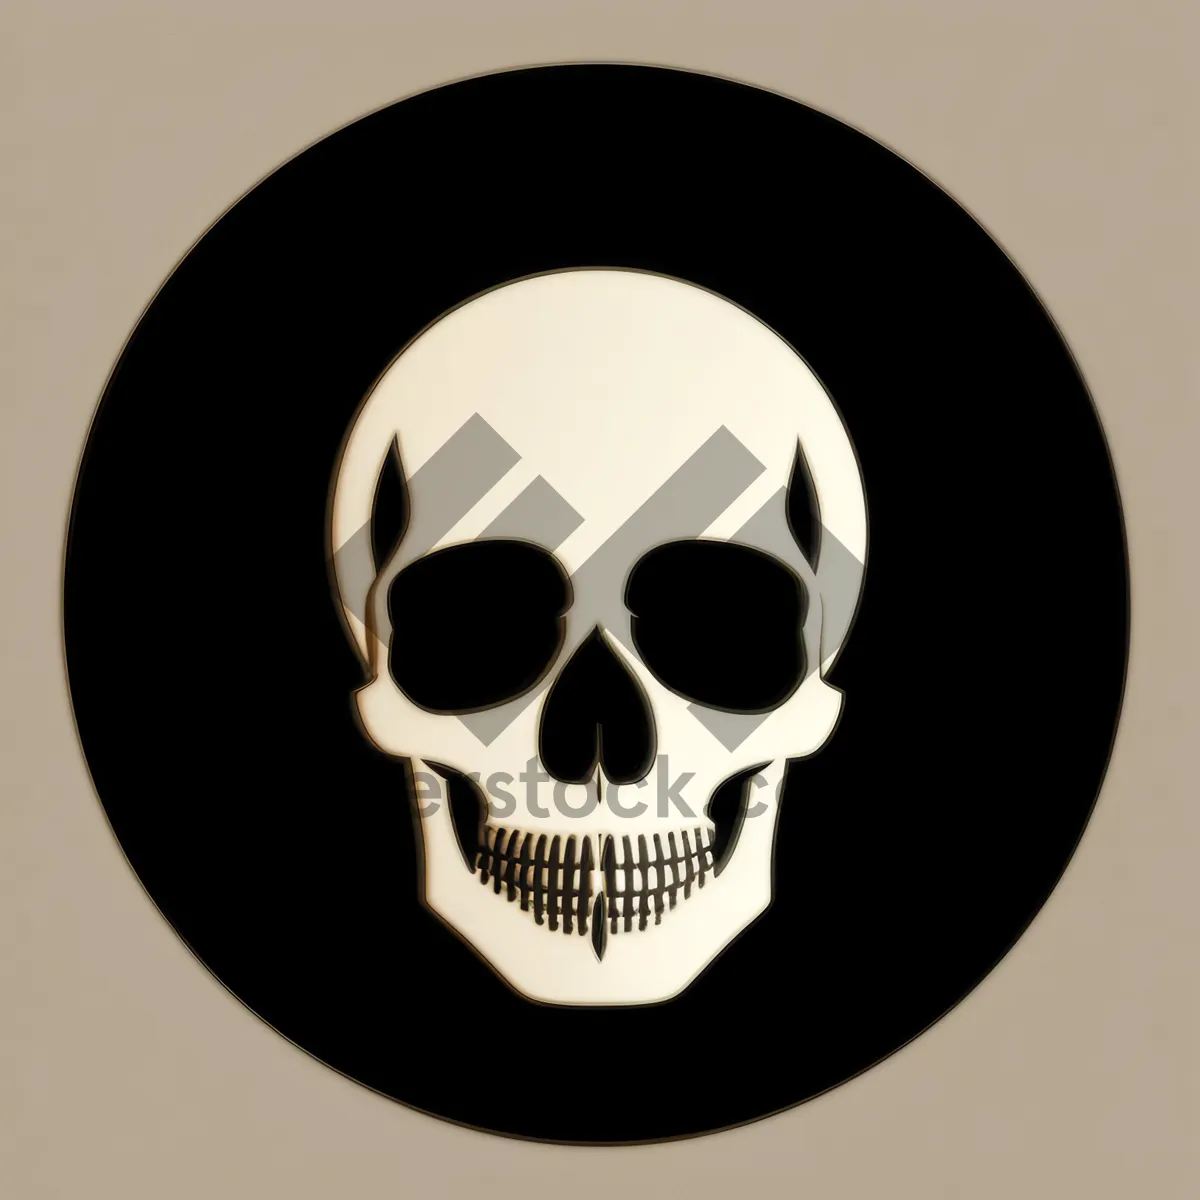 Picture of Deadly Black Skull, Symbol of Horror